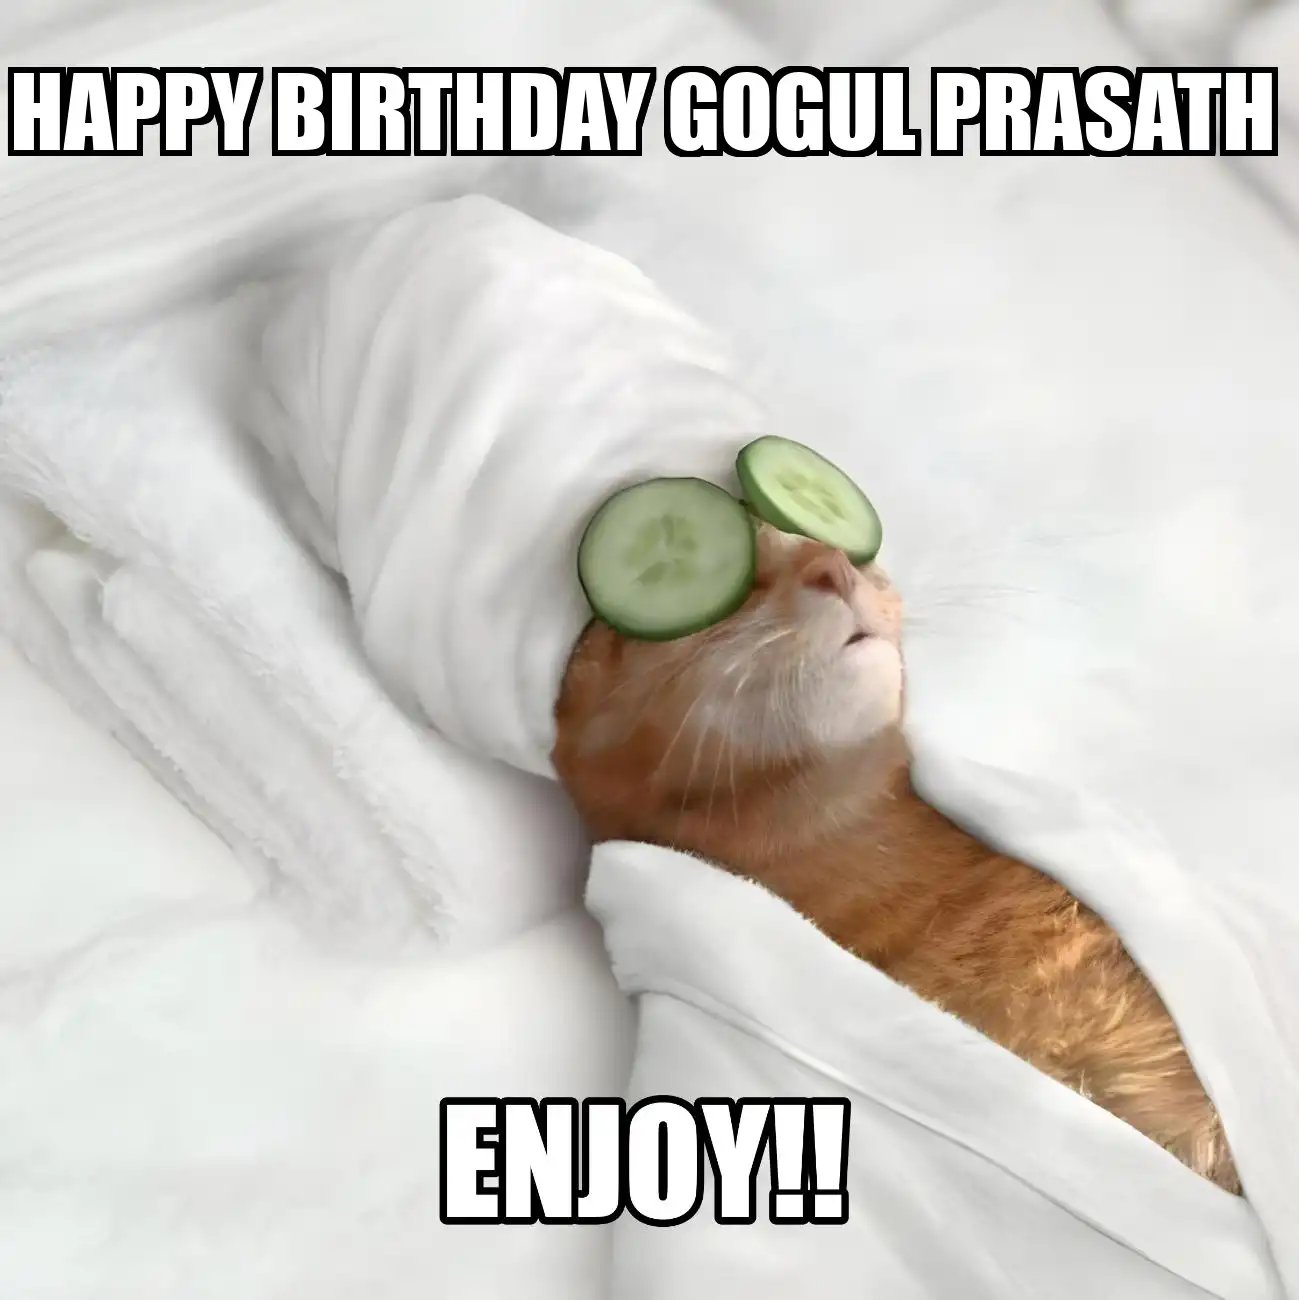 Happy Birthday Gogul prasath Enjoy Cat Meme